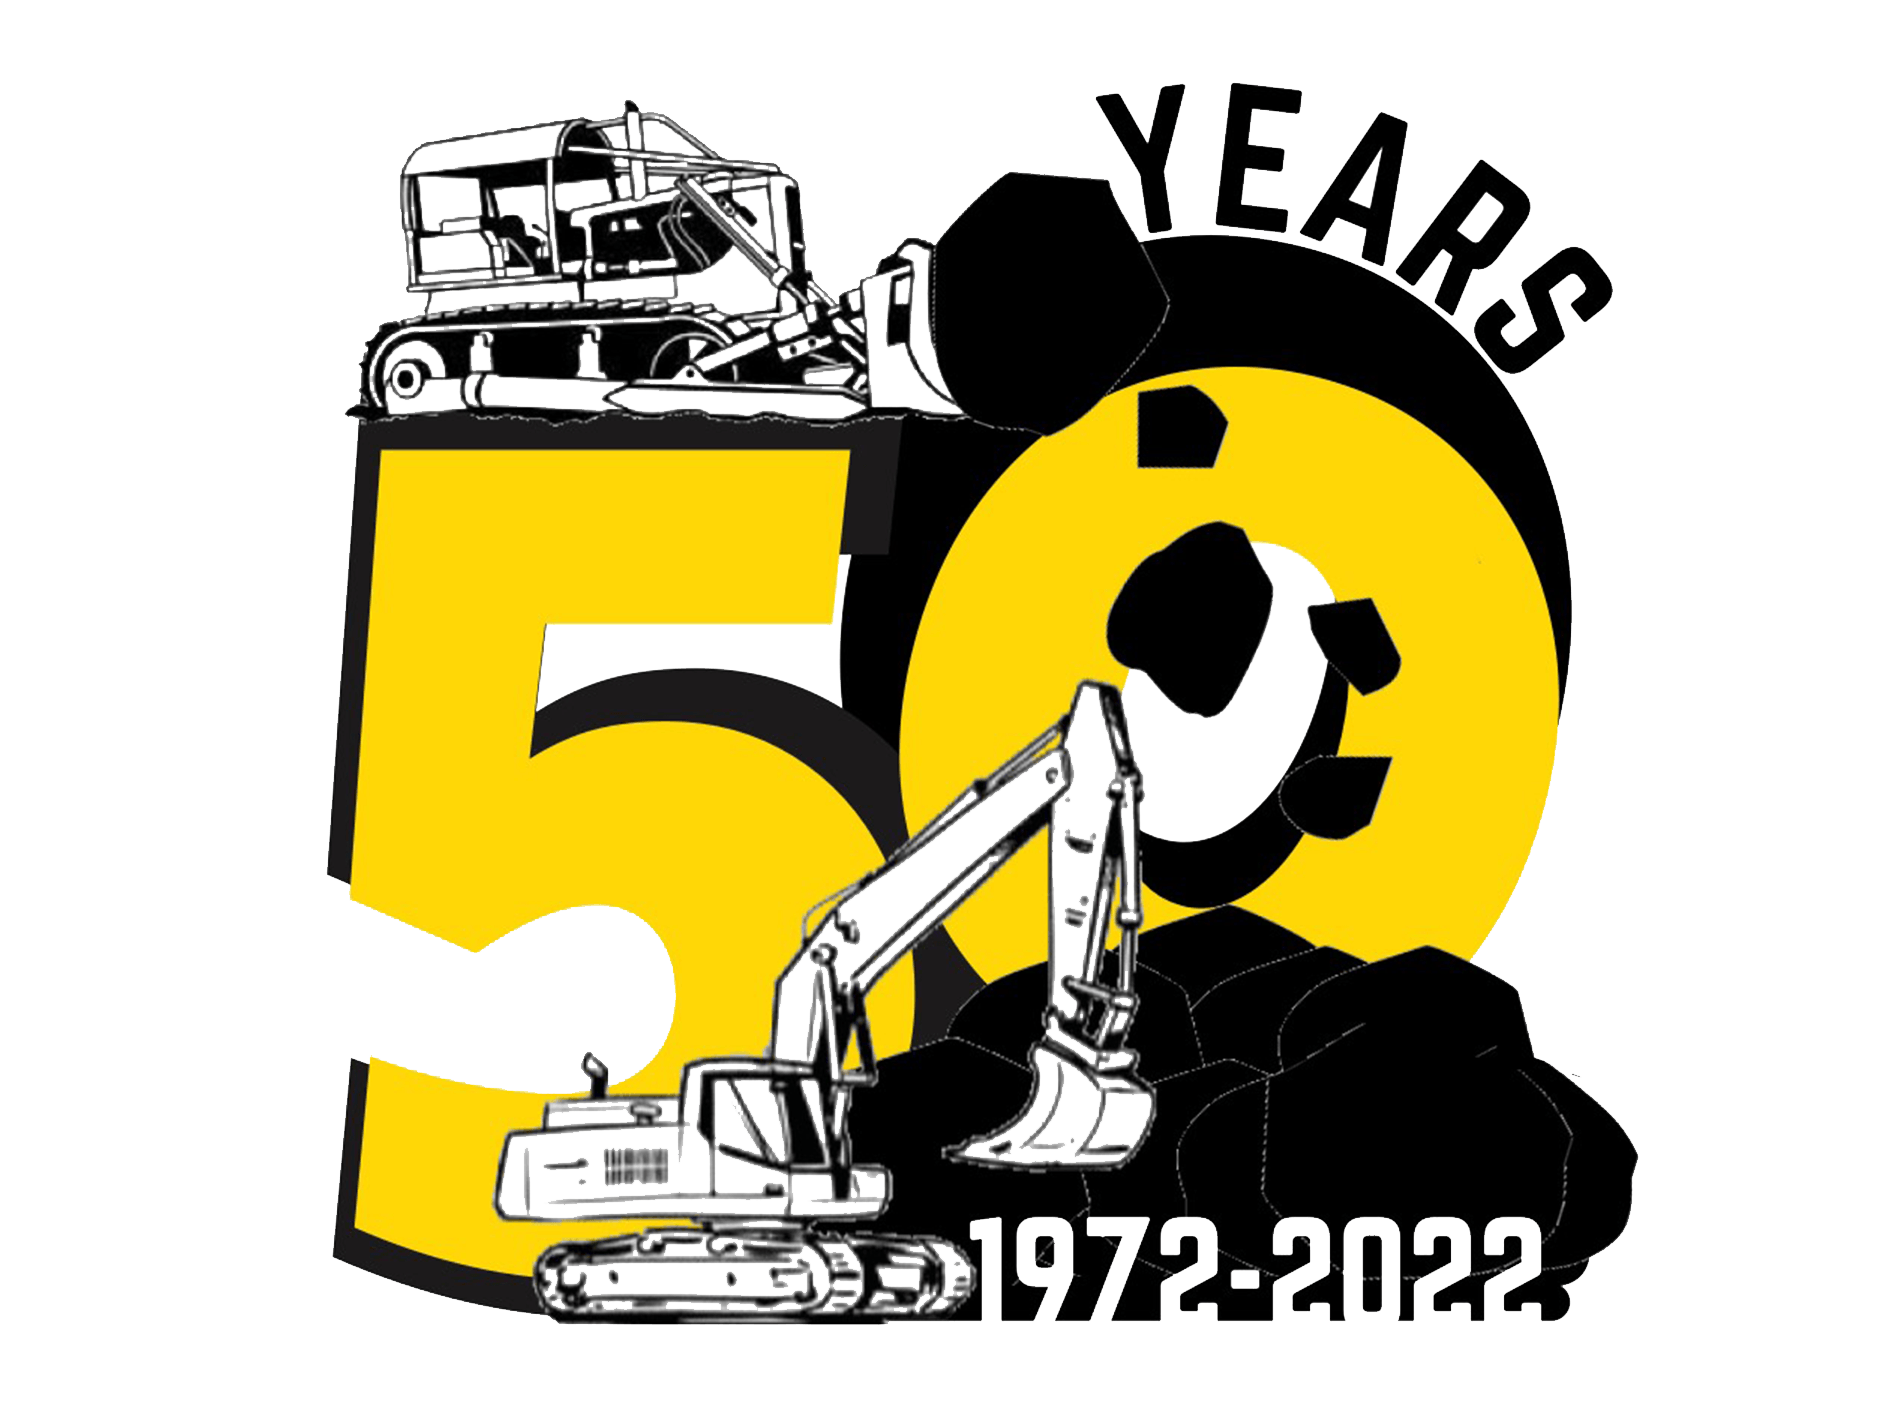 50 Years of Vernice